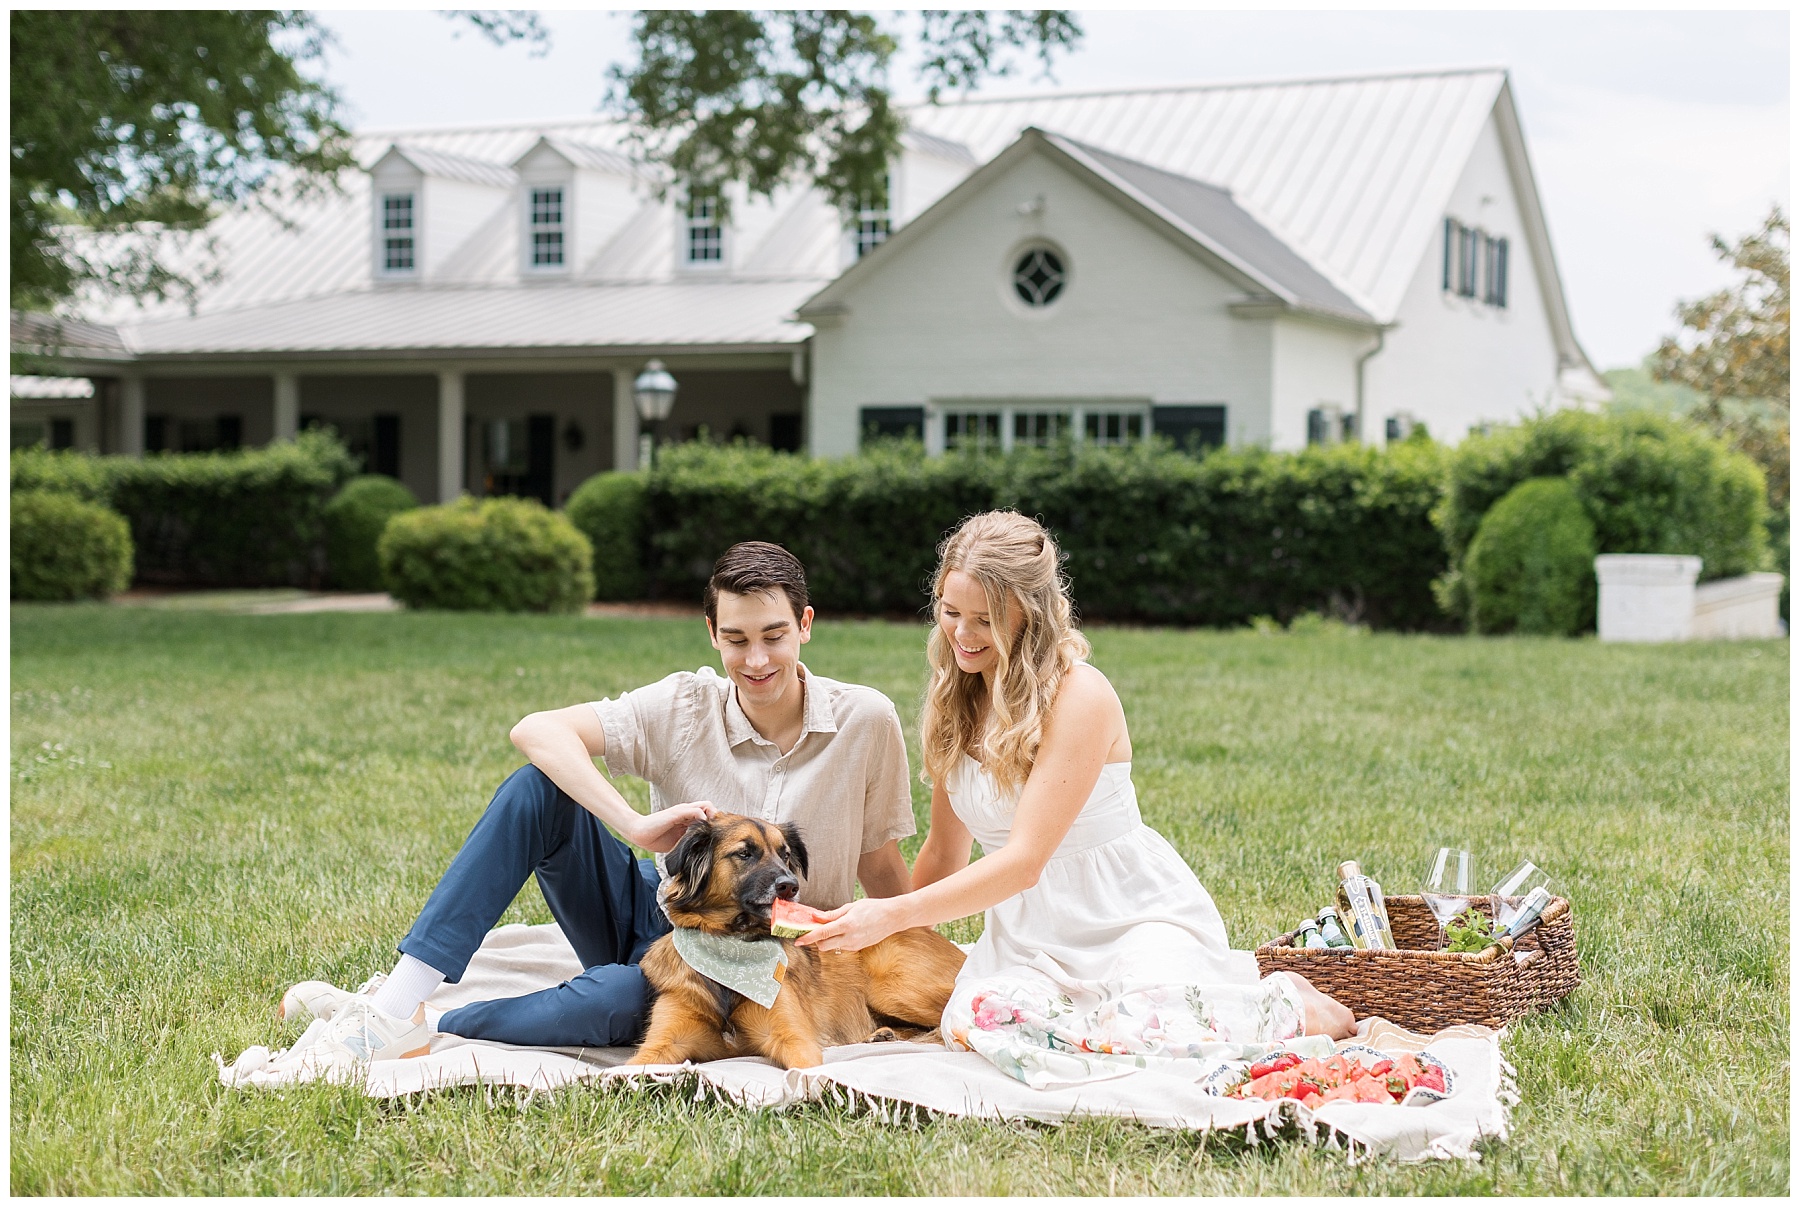 Winston-Salem Engagement Session at Brookberry Farm with a summer picnic | NC Engagement Photographer | Sarah Hinckley Photography